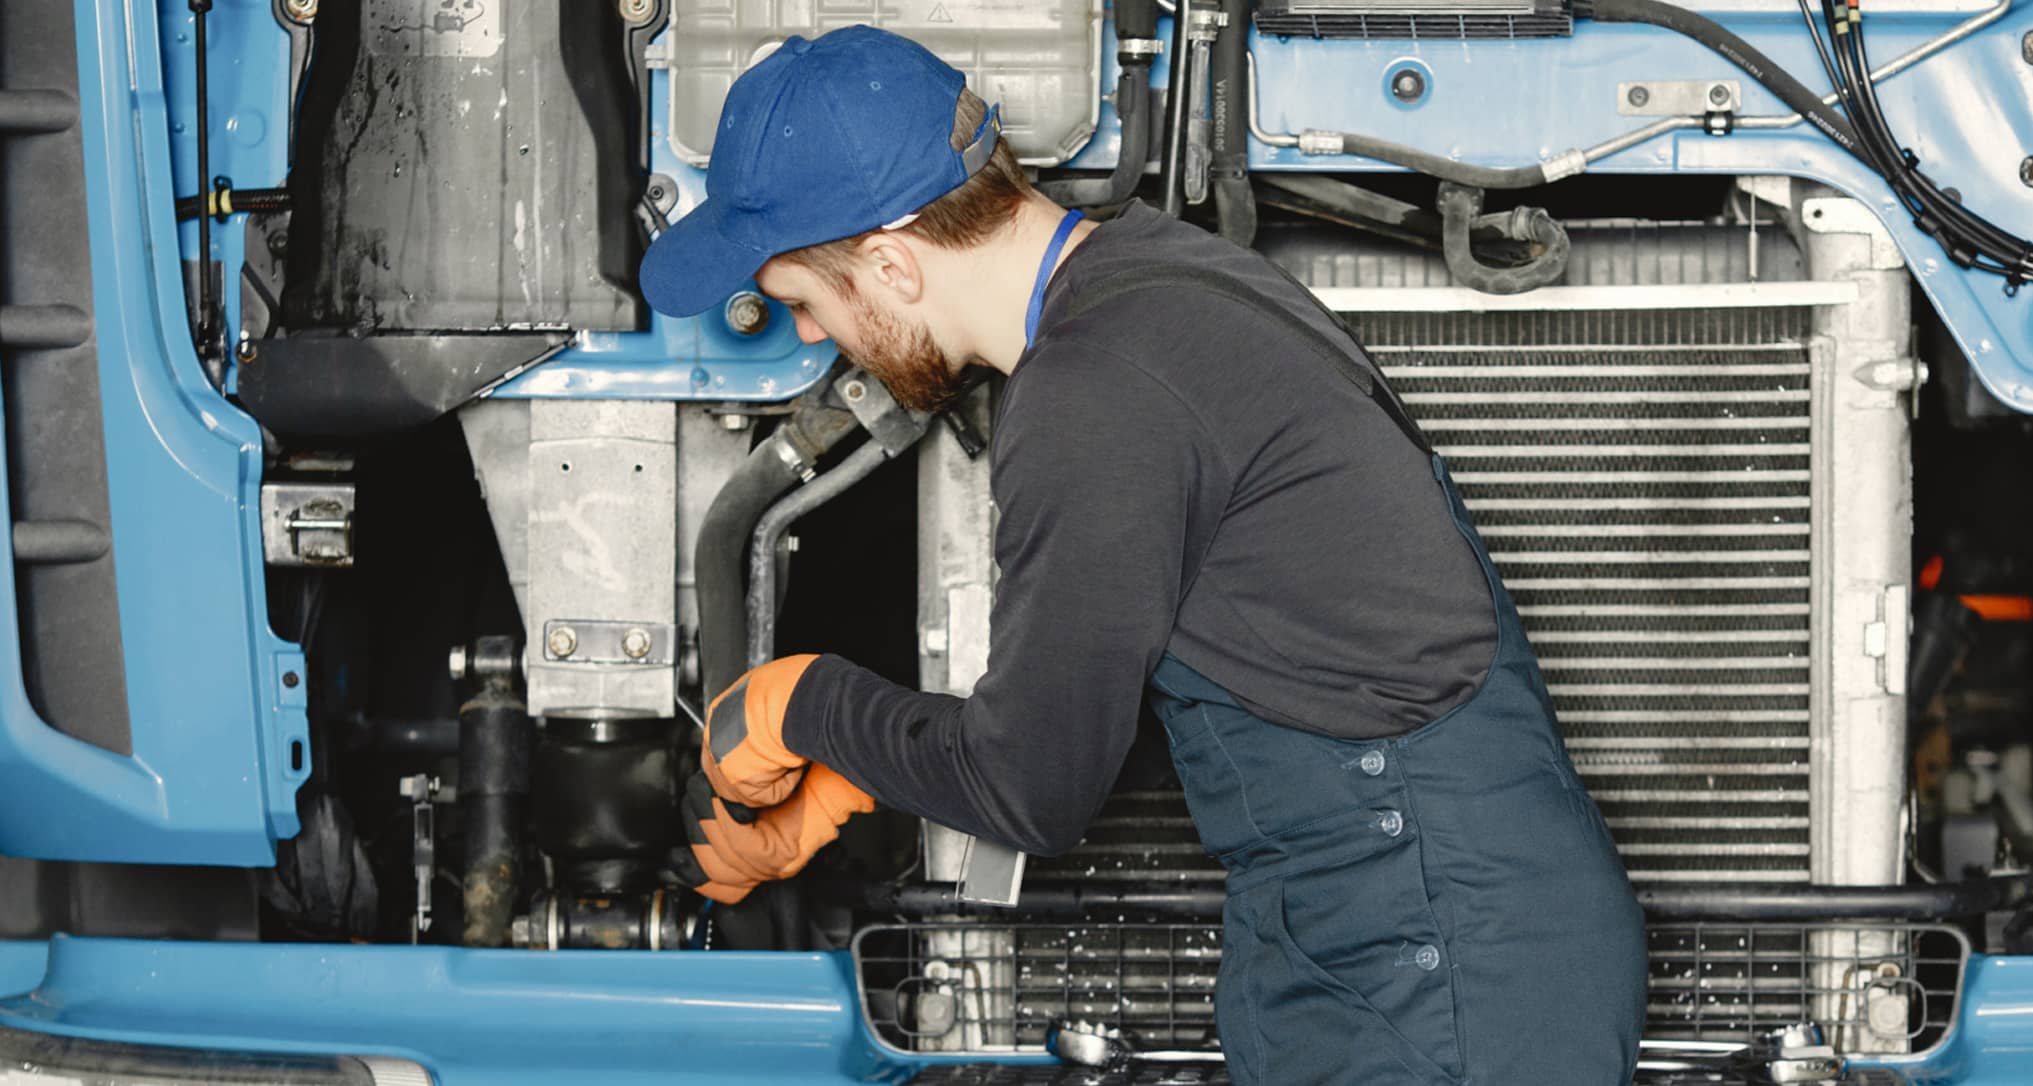 Worker checks quality of truck in garage in uniform